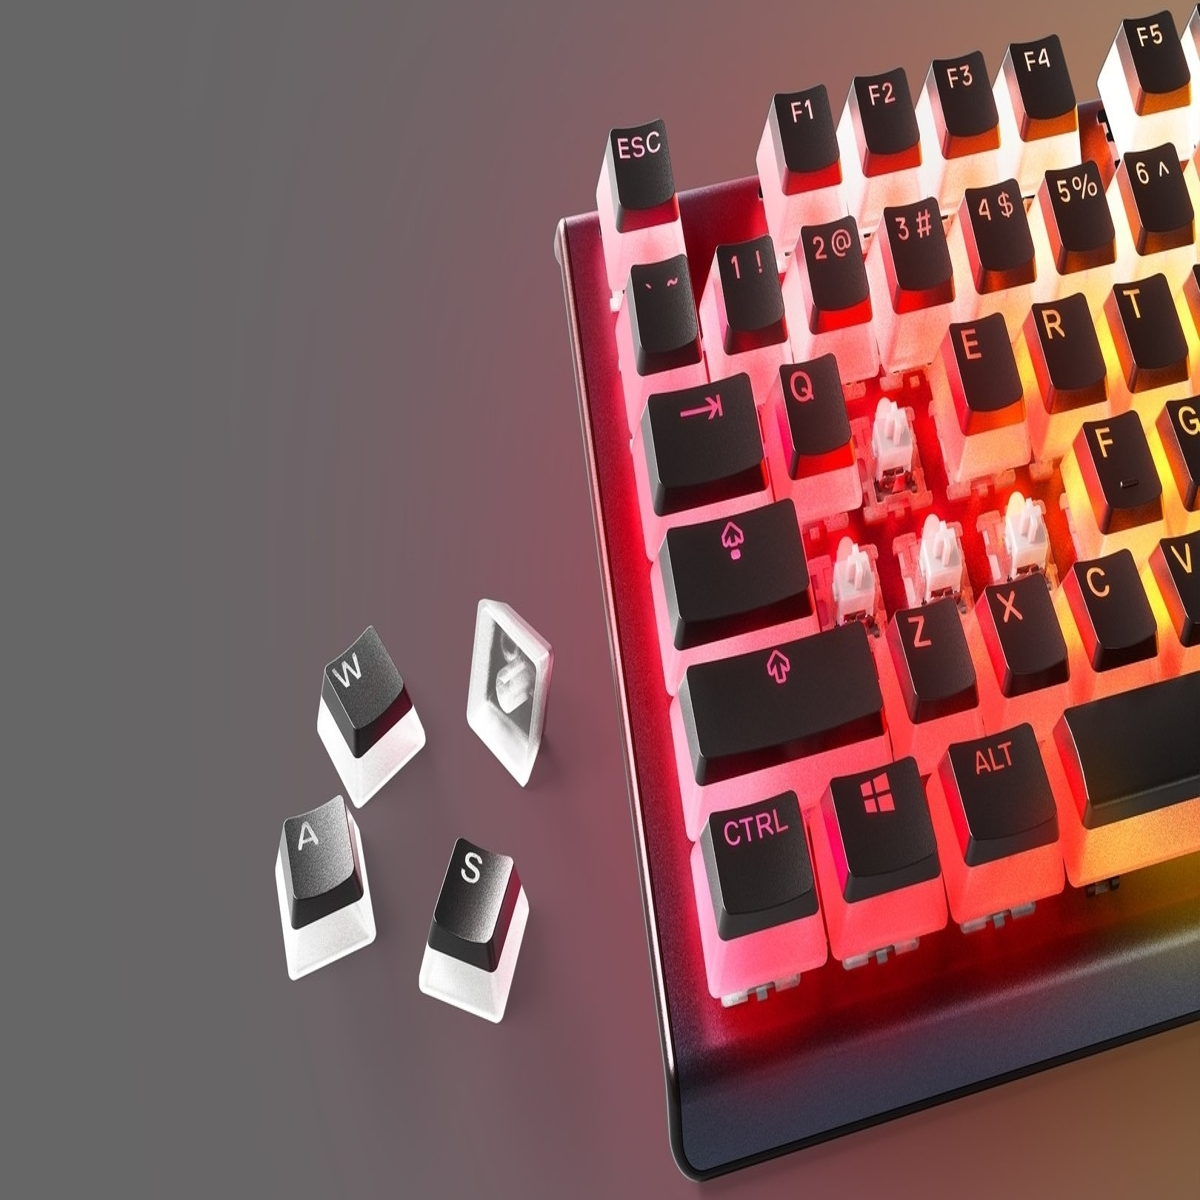 Best gaming keyboards 2021